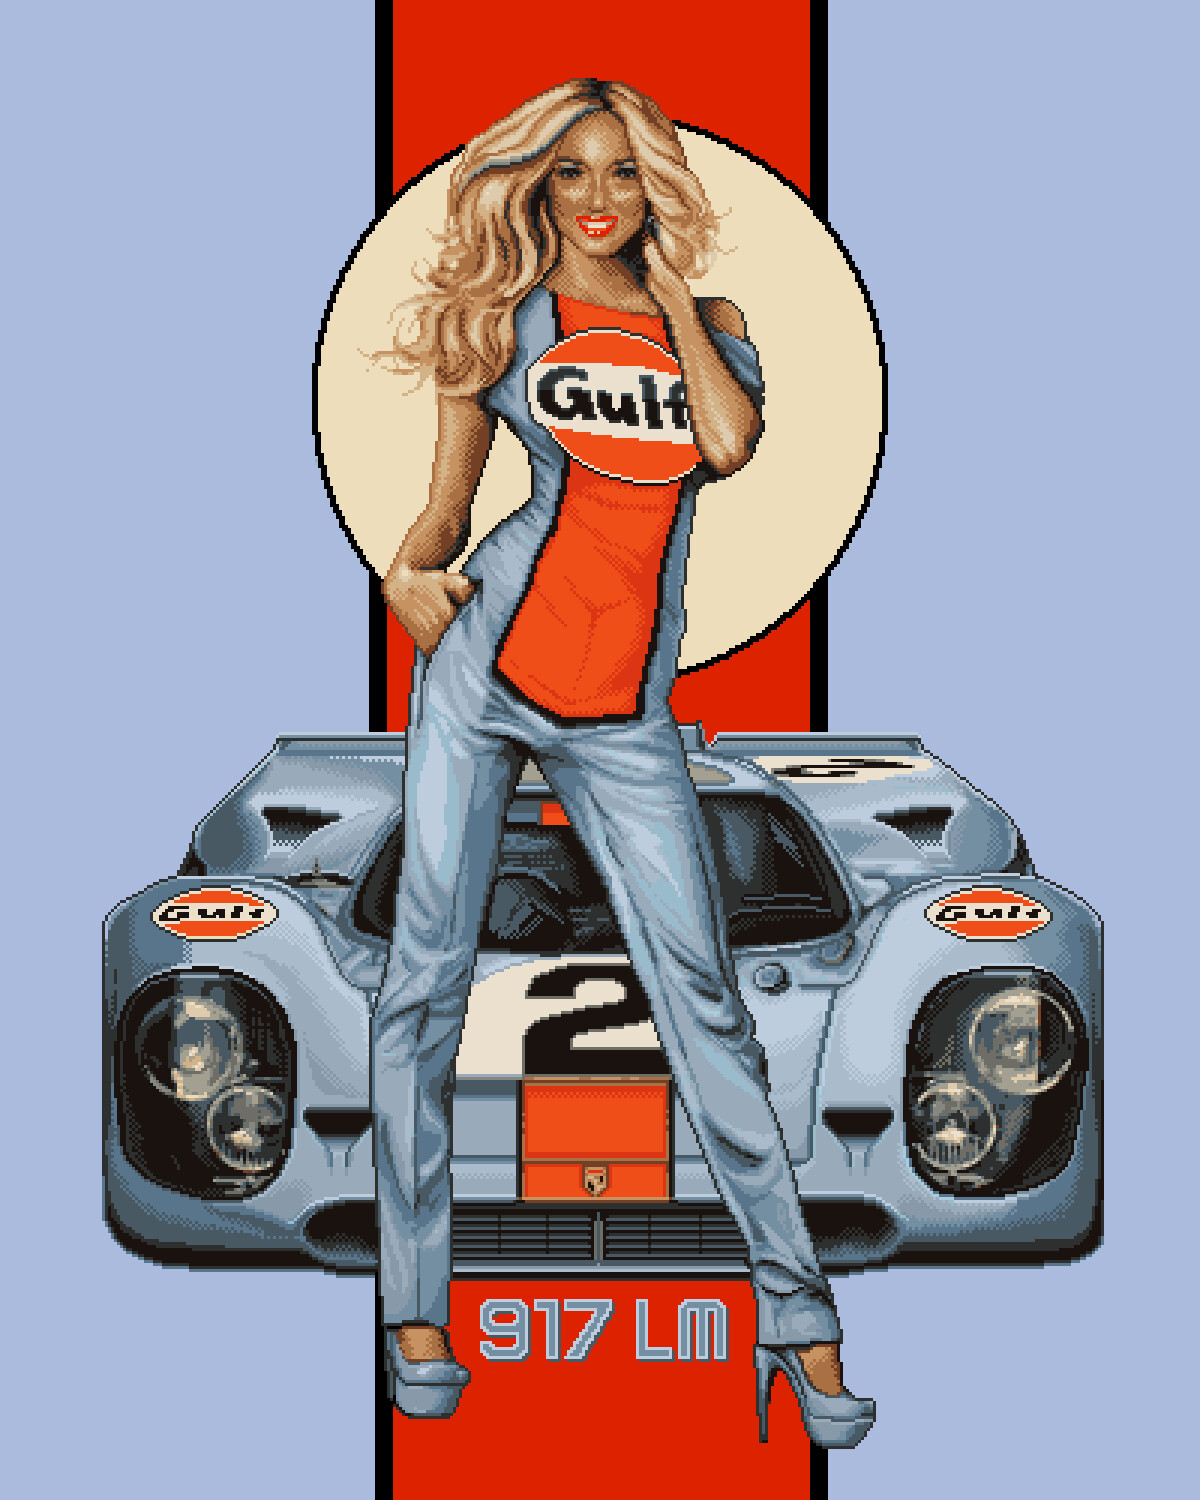 ArtStation - Gulf 917 LM